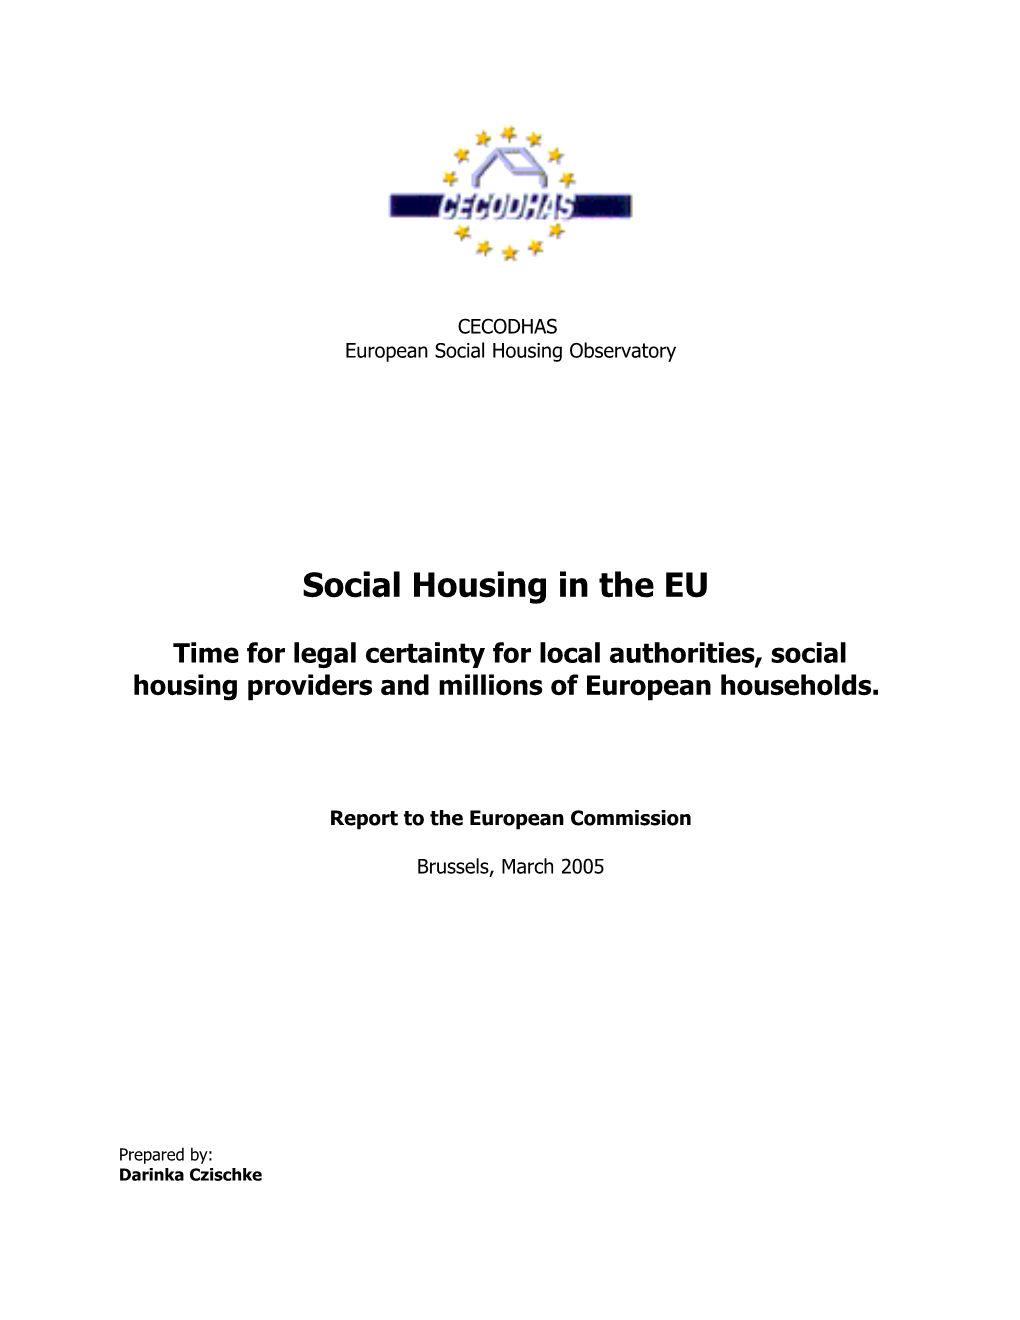 CECODHAS European Social Housing Observatory